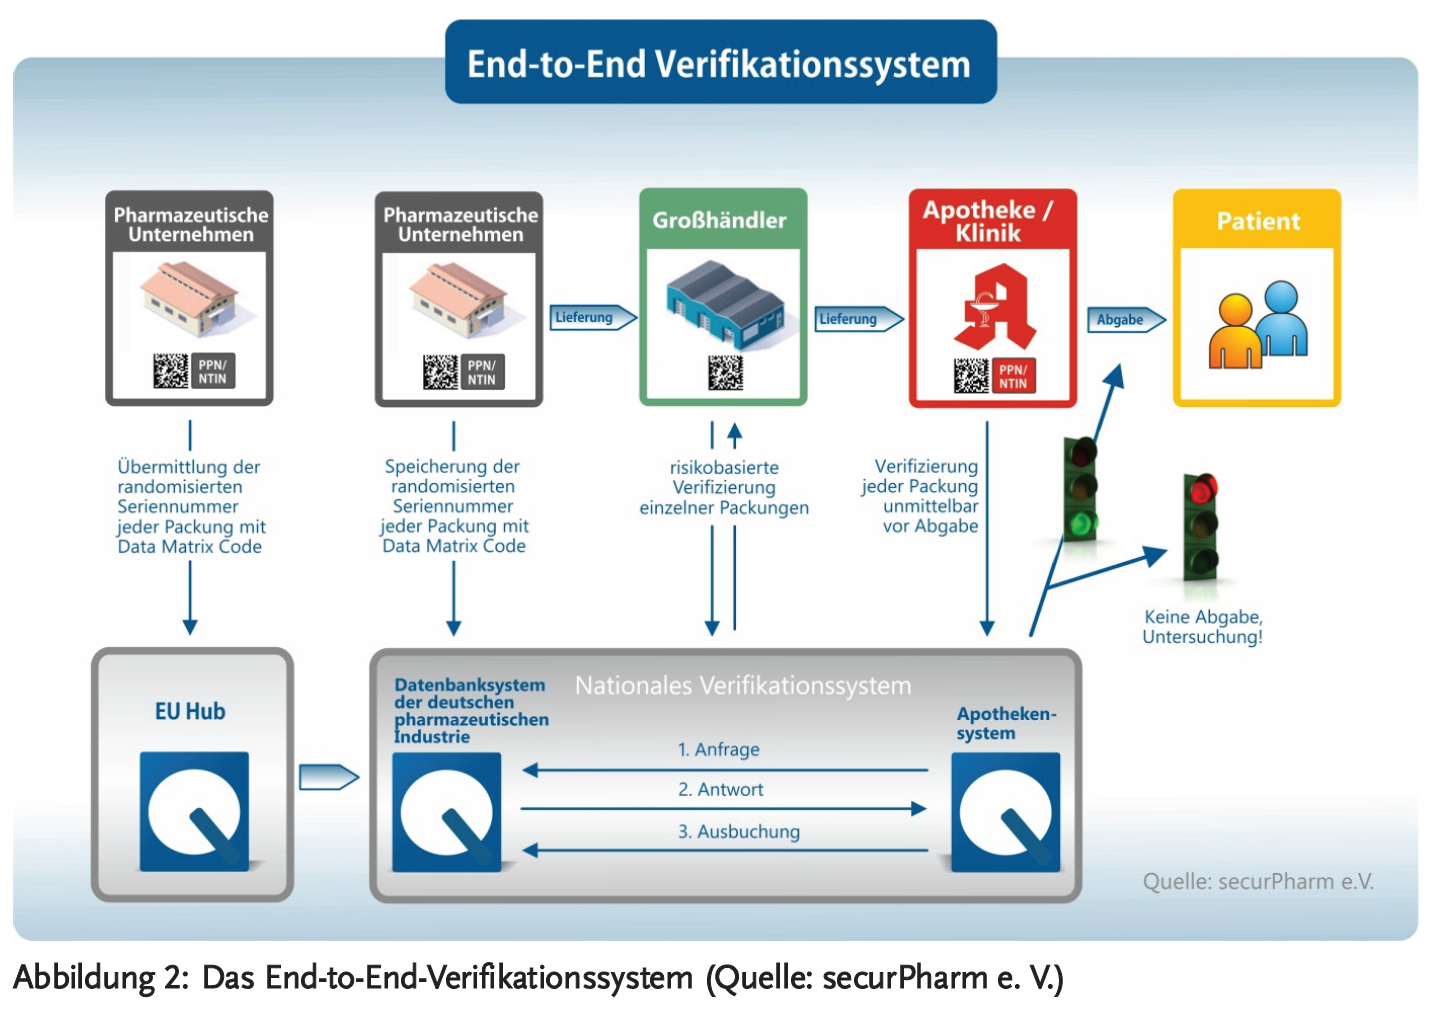 Abbildung 2: Das End-to-End-Verifikationssystem (Quelle: securPharm e. V.)